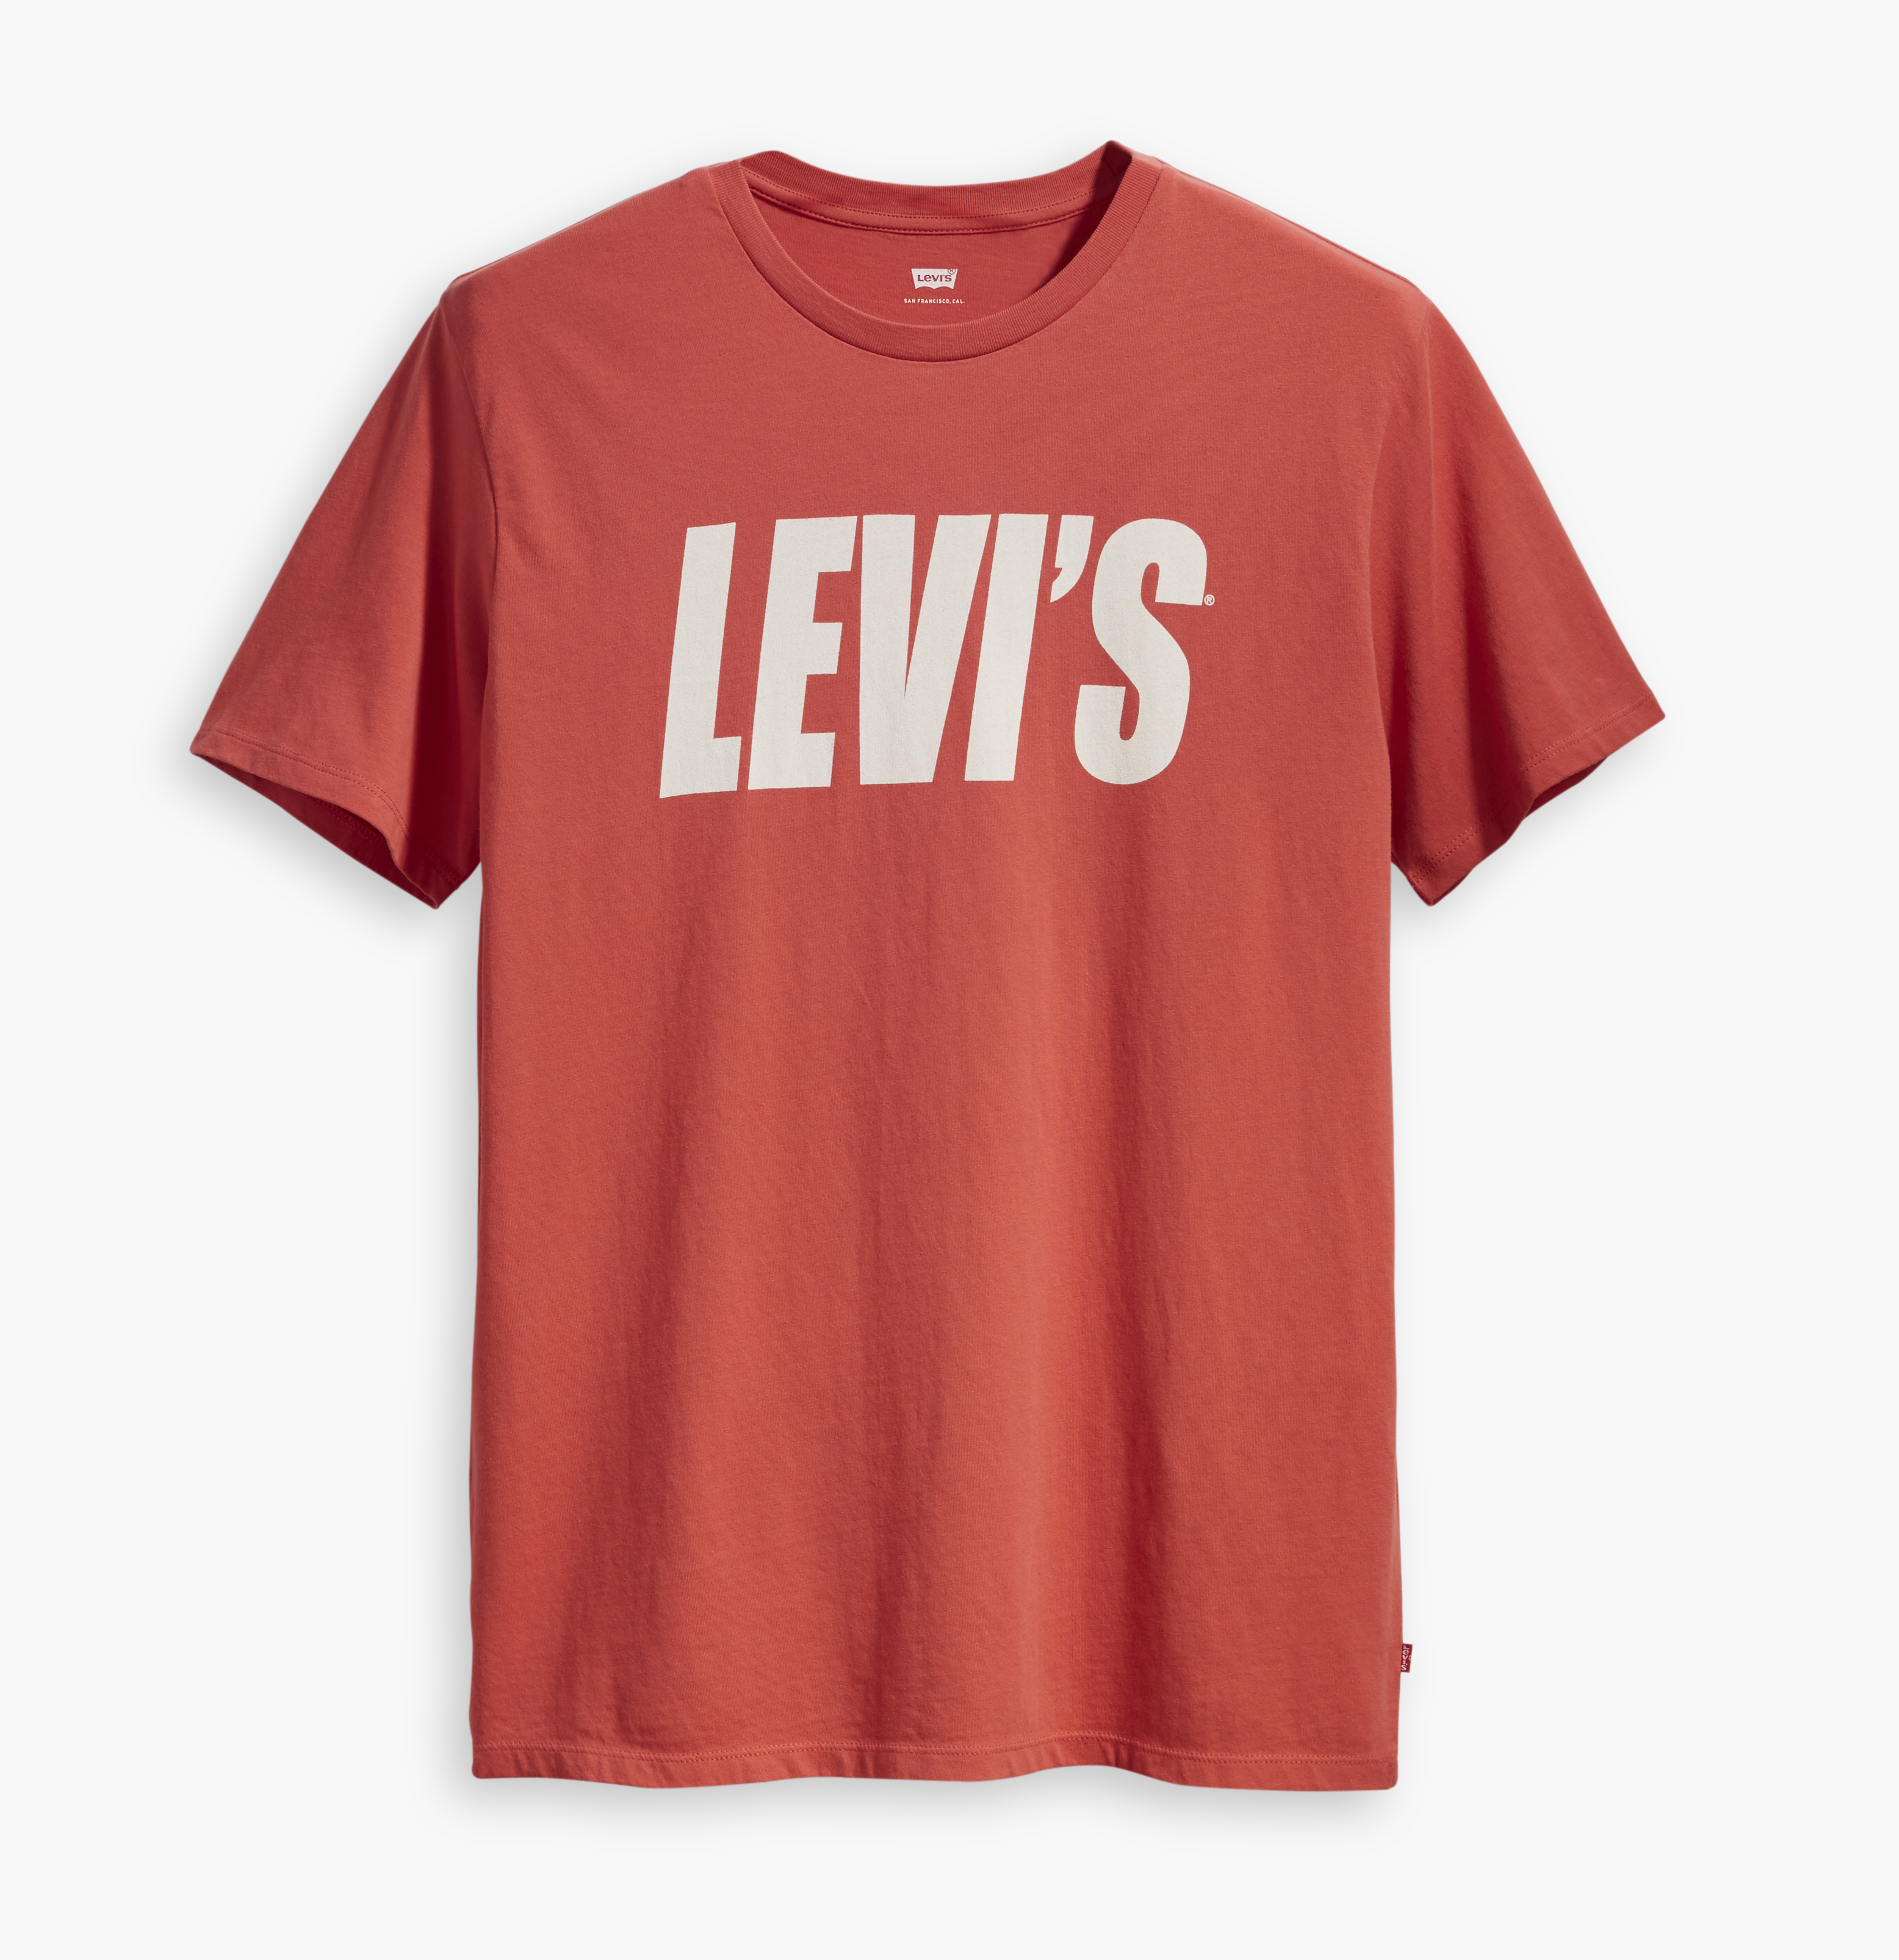 LEVIS Shirts Rundhals T-Shirt 22491-0412 rot W18-LVT1